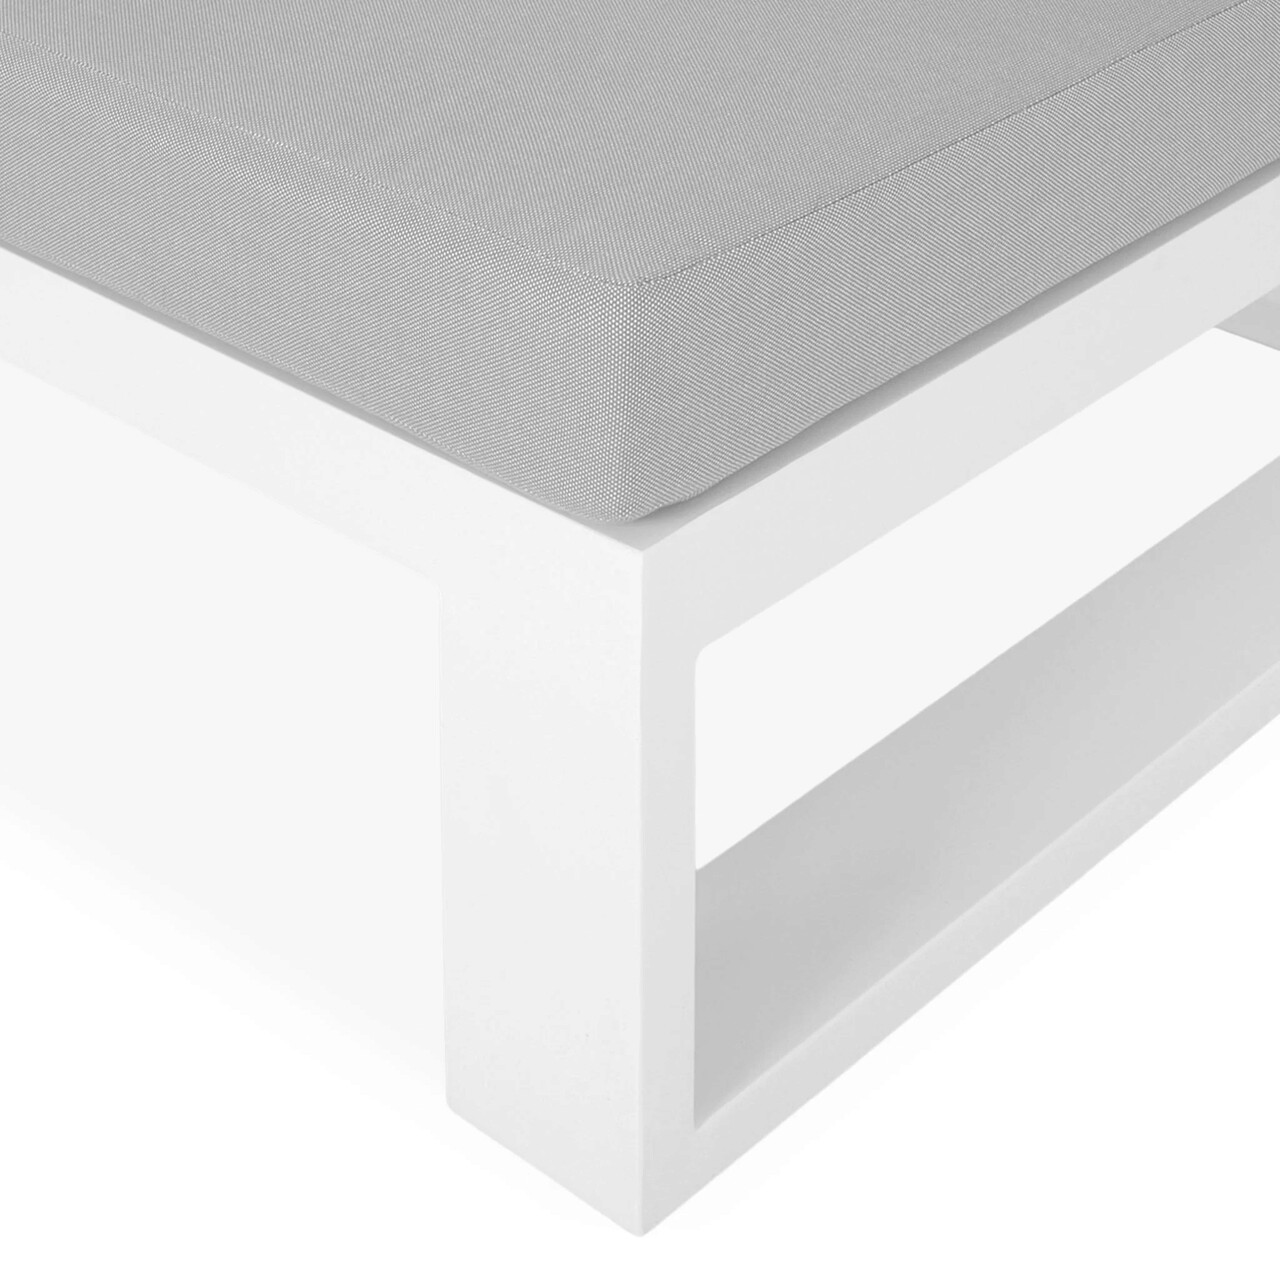 Canapea 2 locuri pentru exterior cu brat pe stanga Fermo, 166x88x63 cm, aluminiu, alb/gri